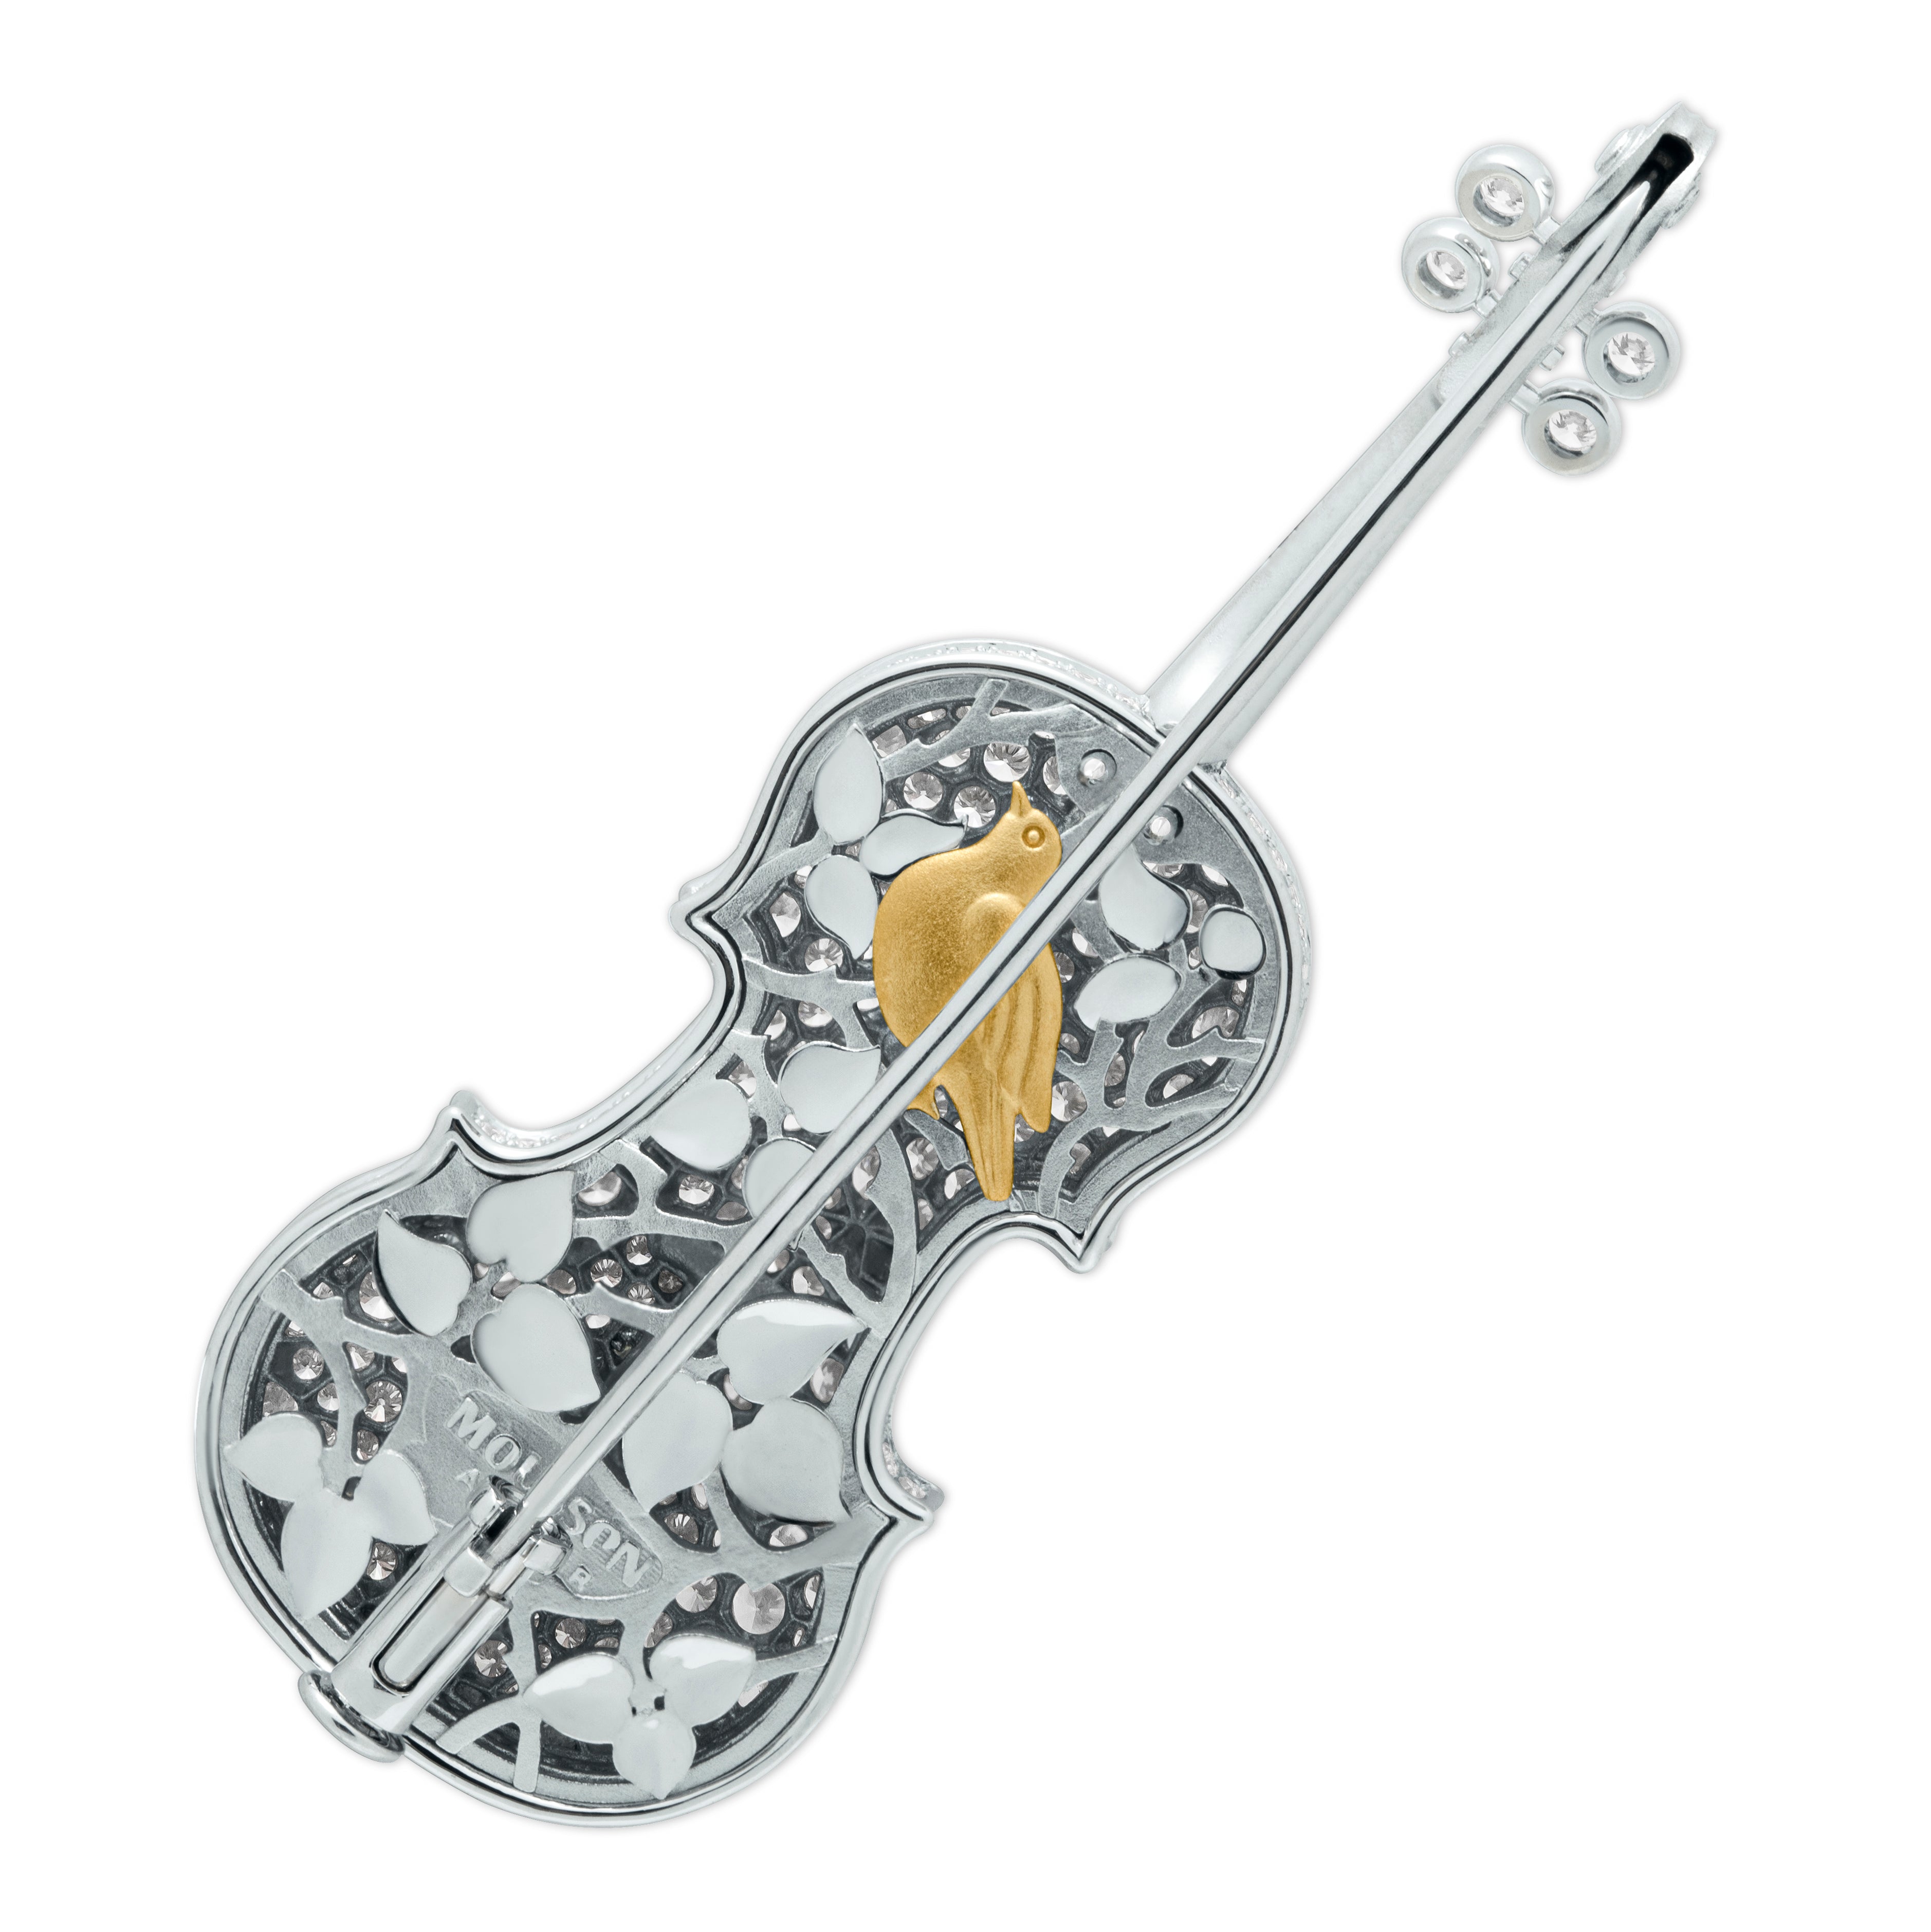 Brs 0267-20, 18K White Gold, Diamonds Violin Brooch